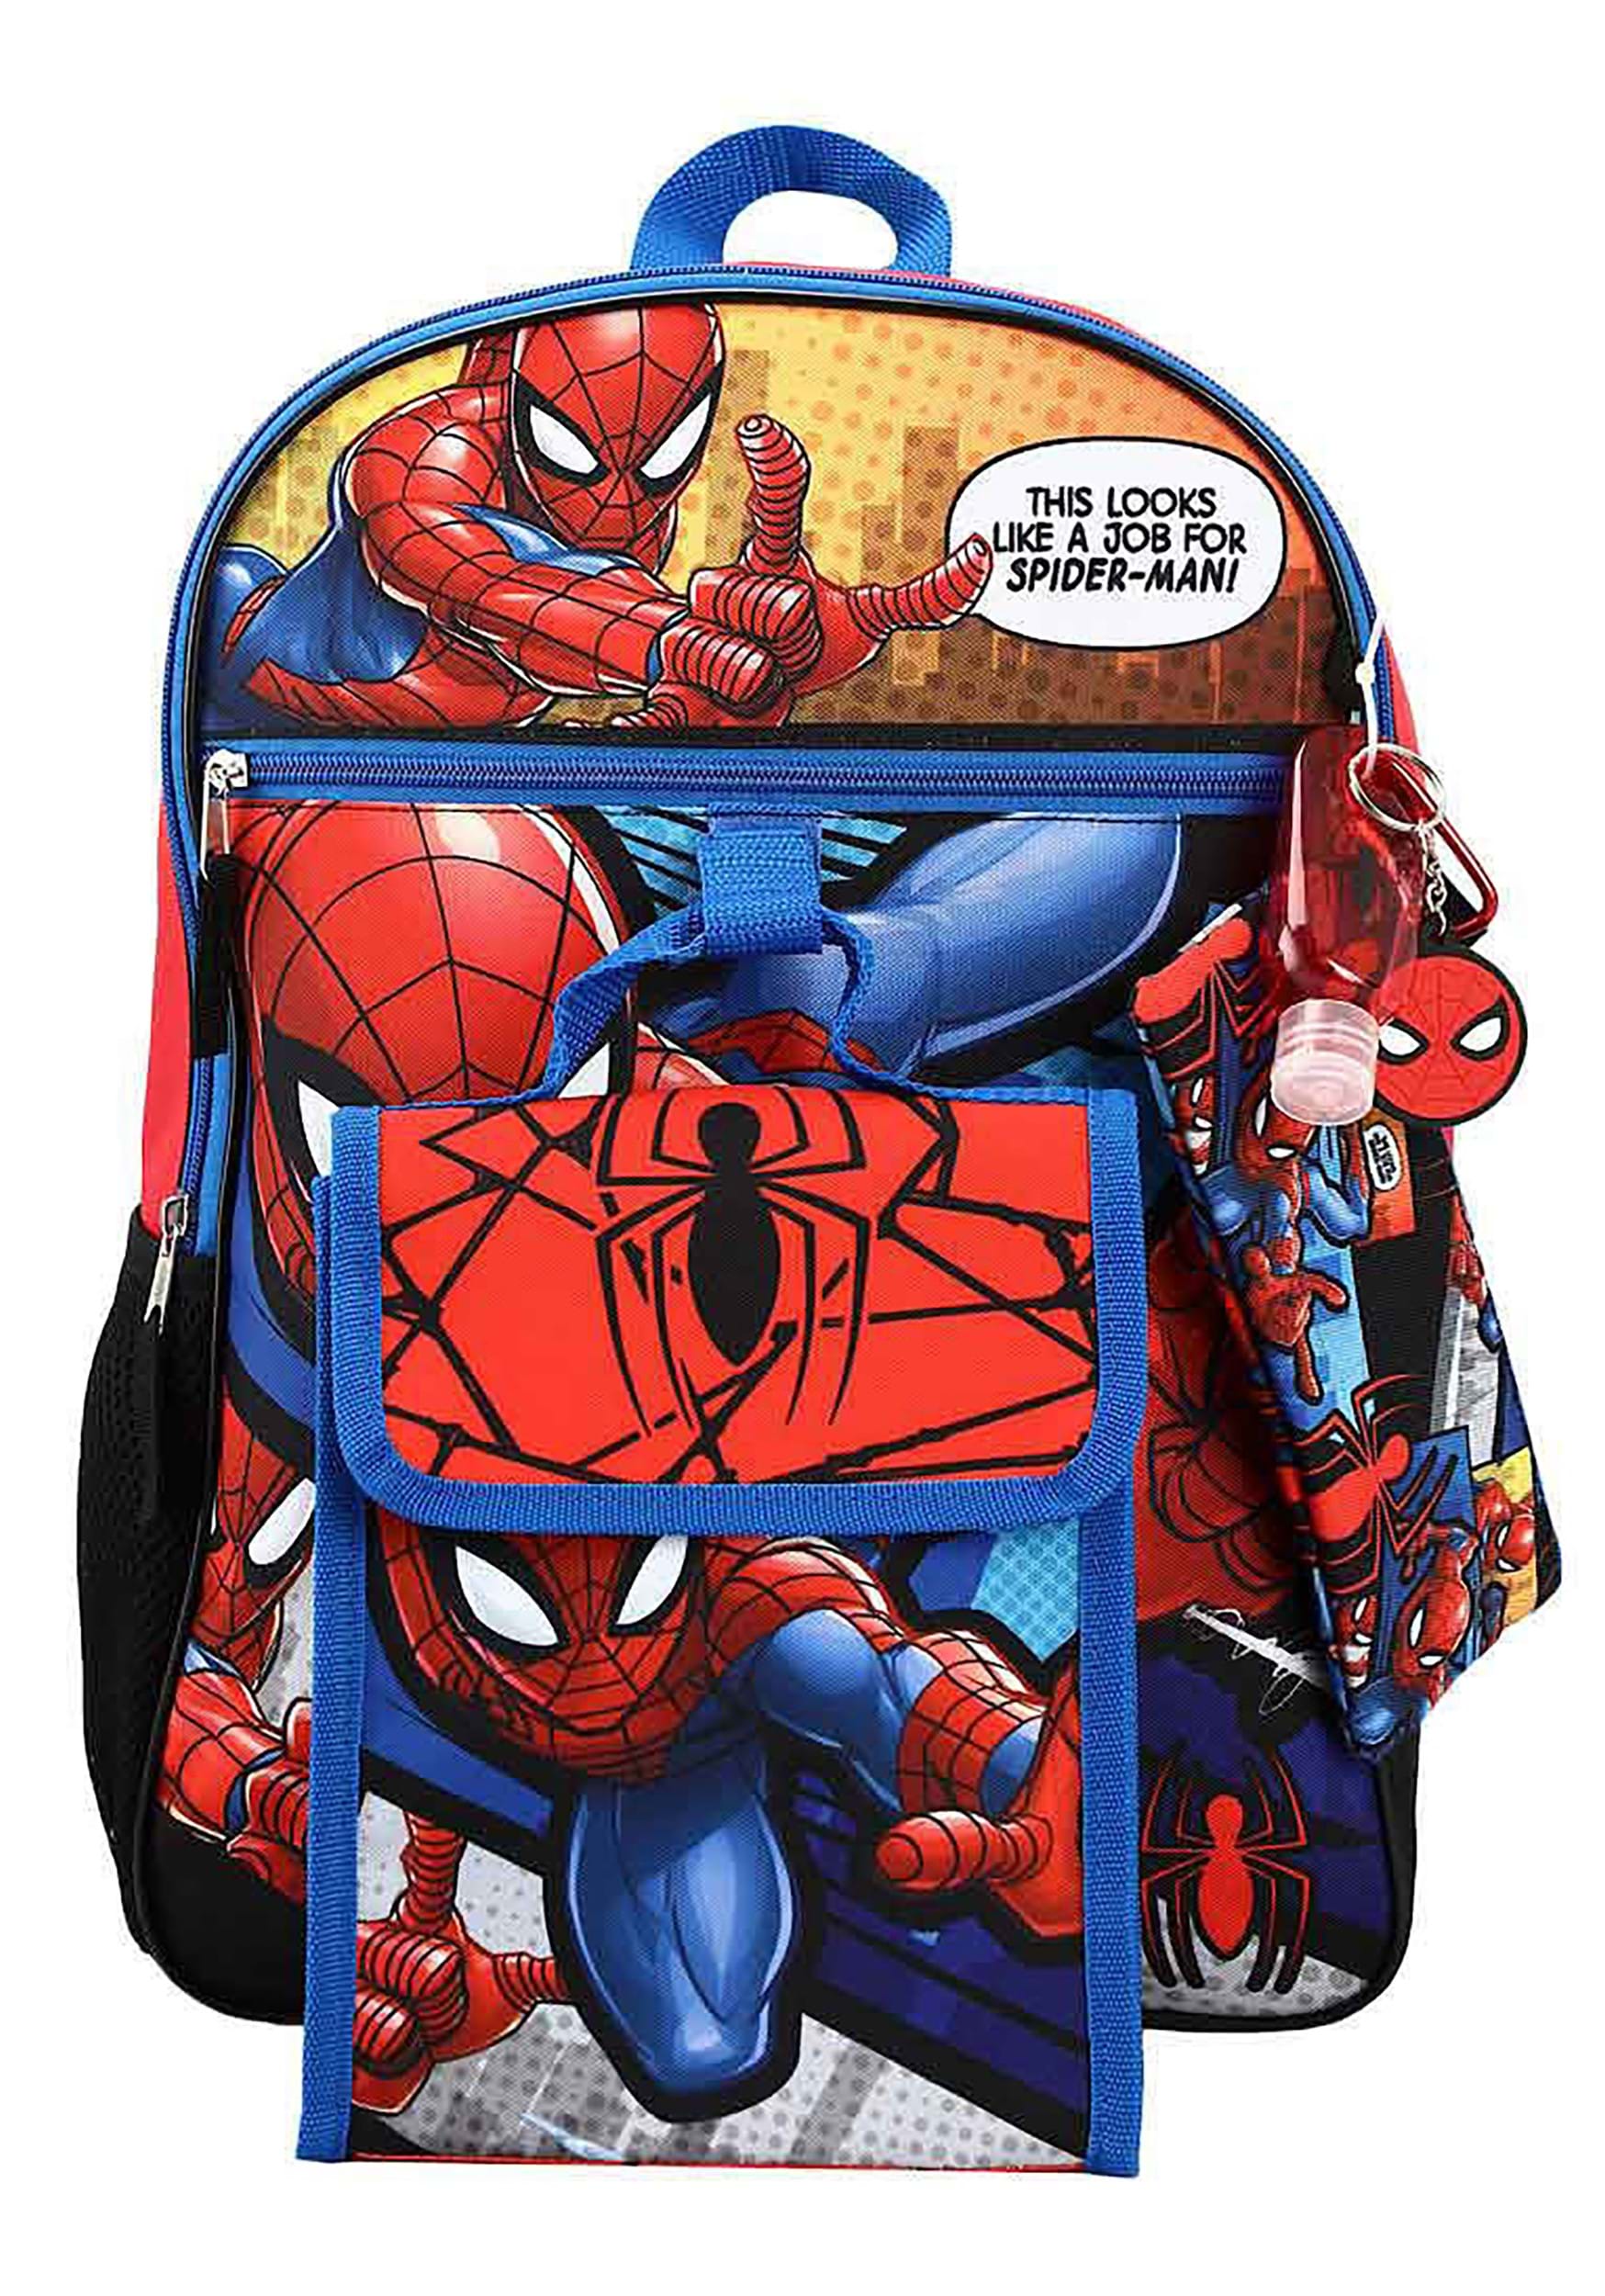 https://images.fun.com/products/86230/1-1/marvel-spider-man-6-piece-backpack-set.jpg